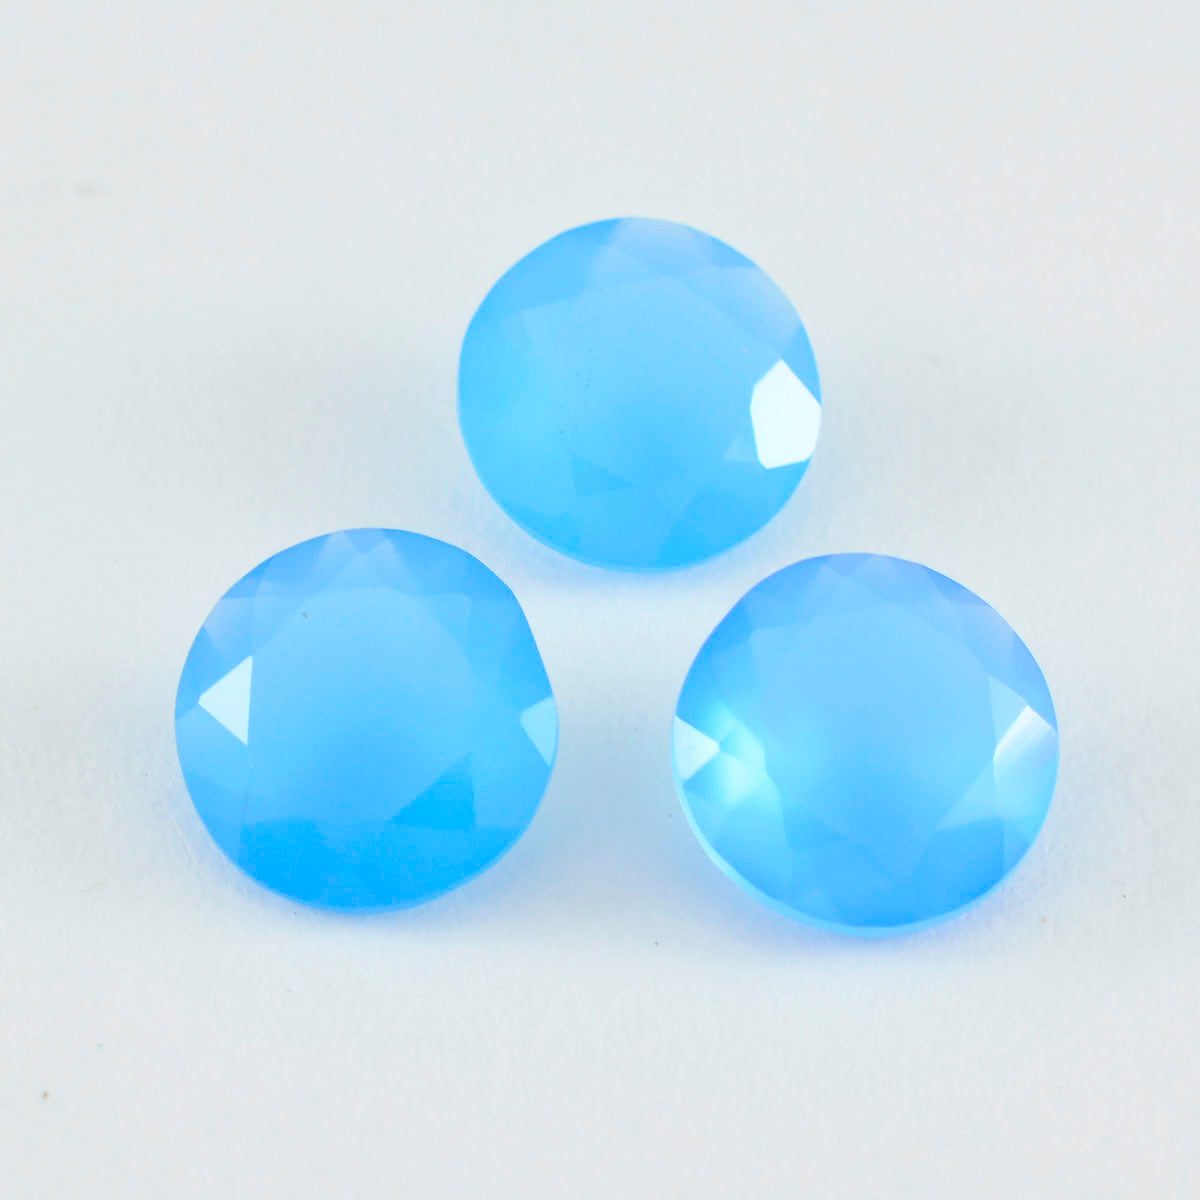 Riyogems 1PC Genuine Blue Chalcedony Faceted 11x11 mm Round Shape amazing Quality Loose Stone